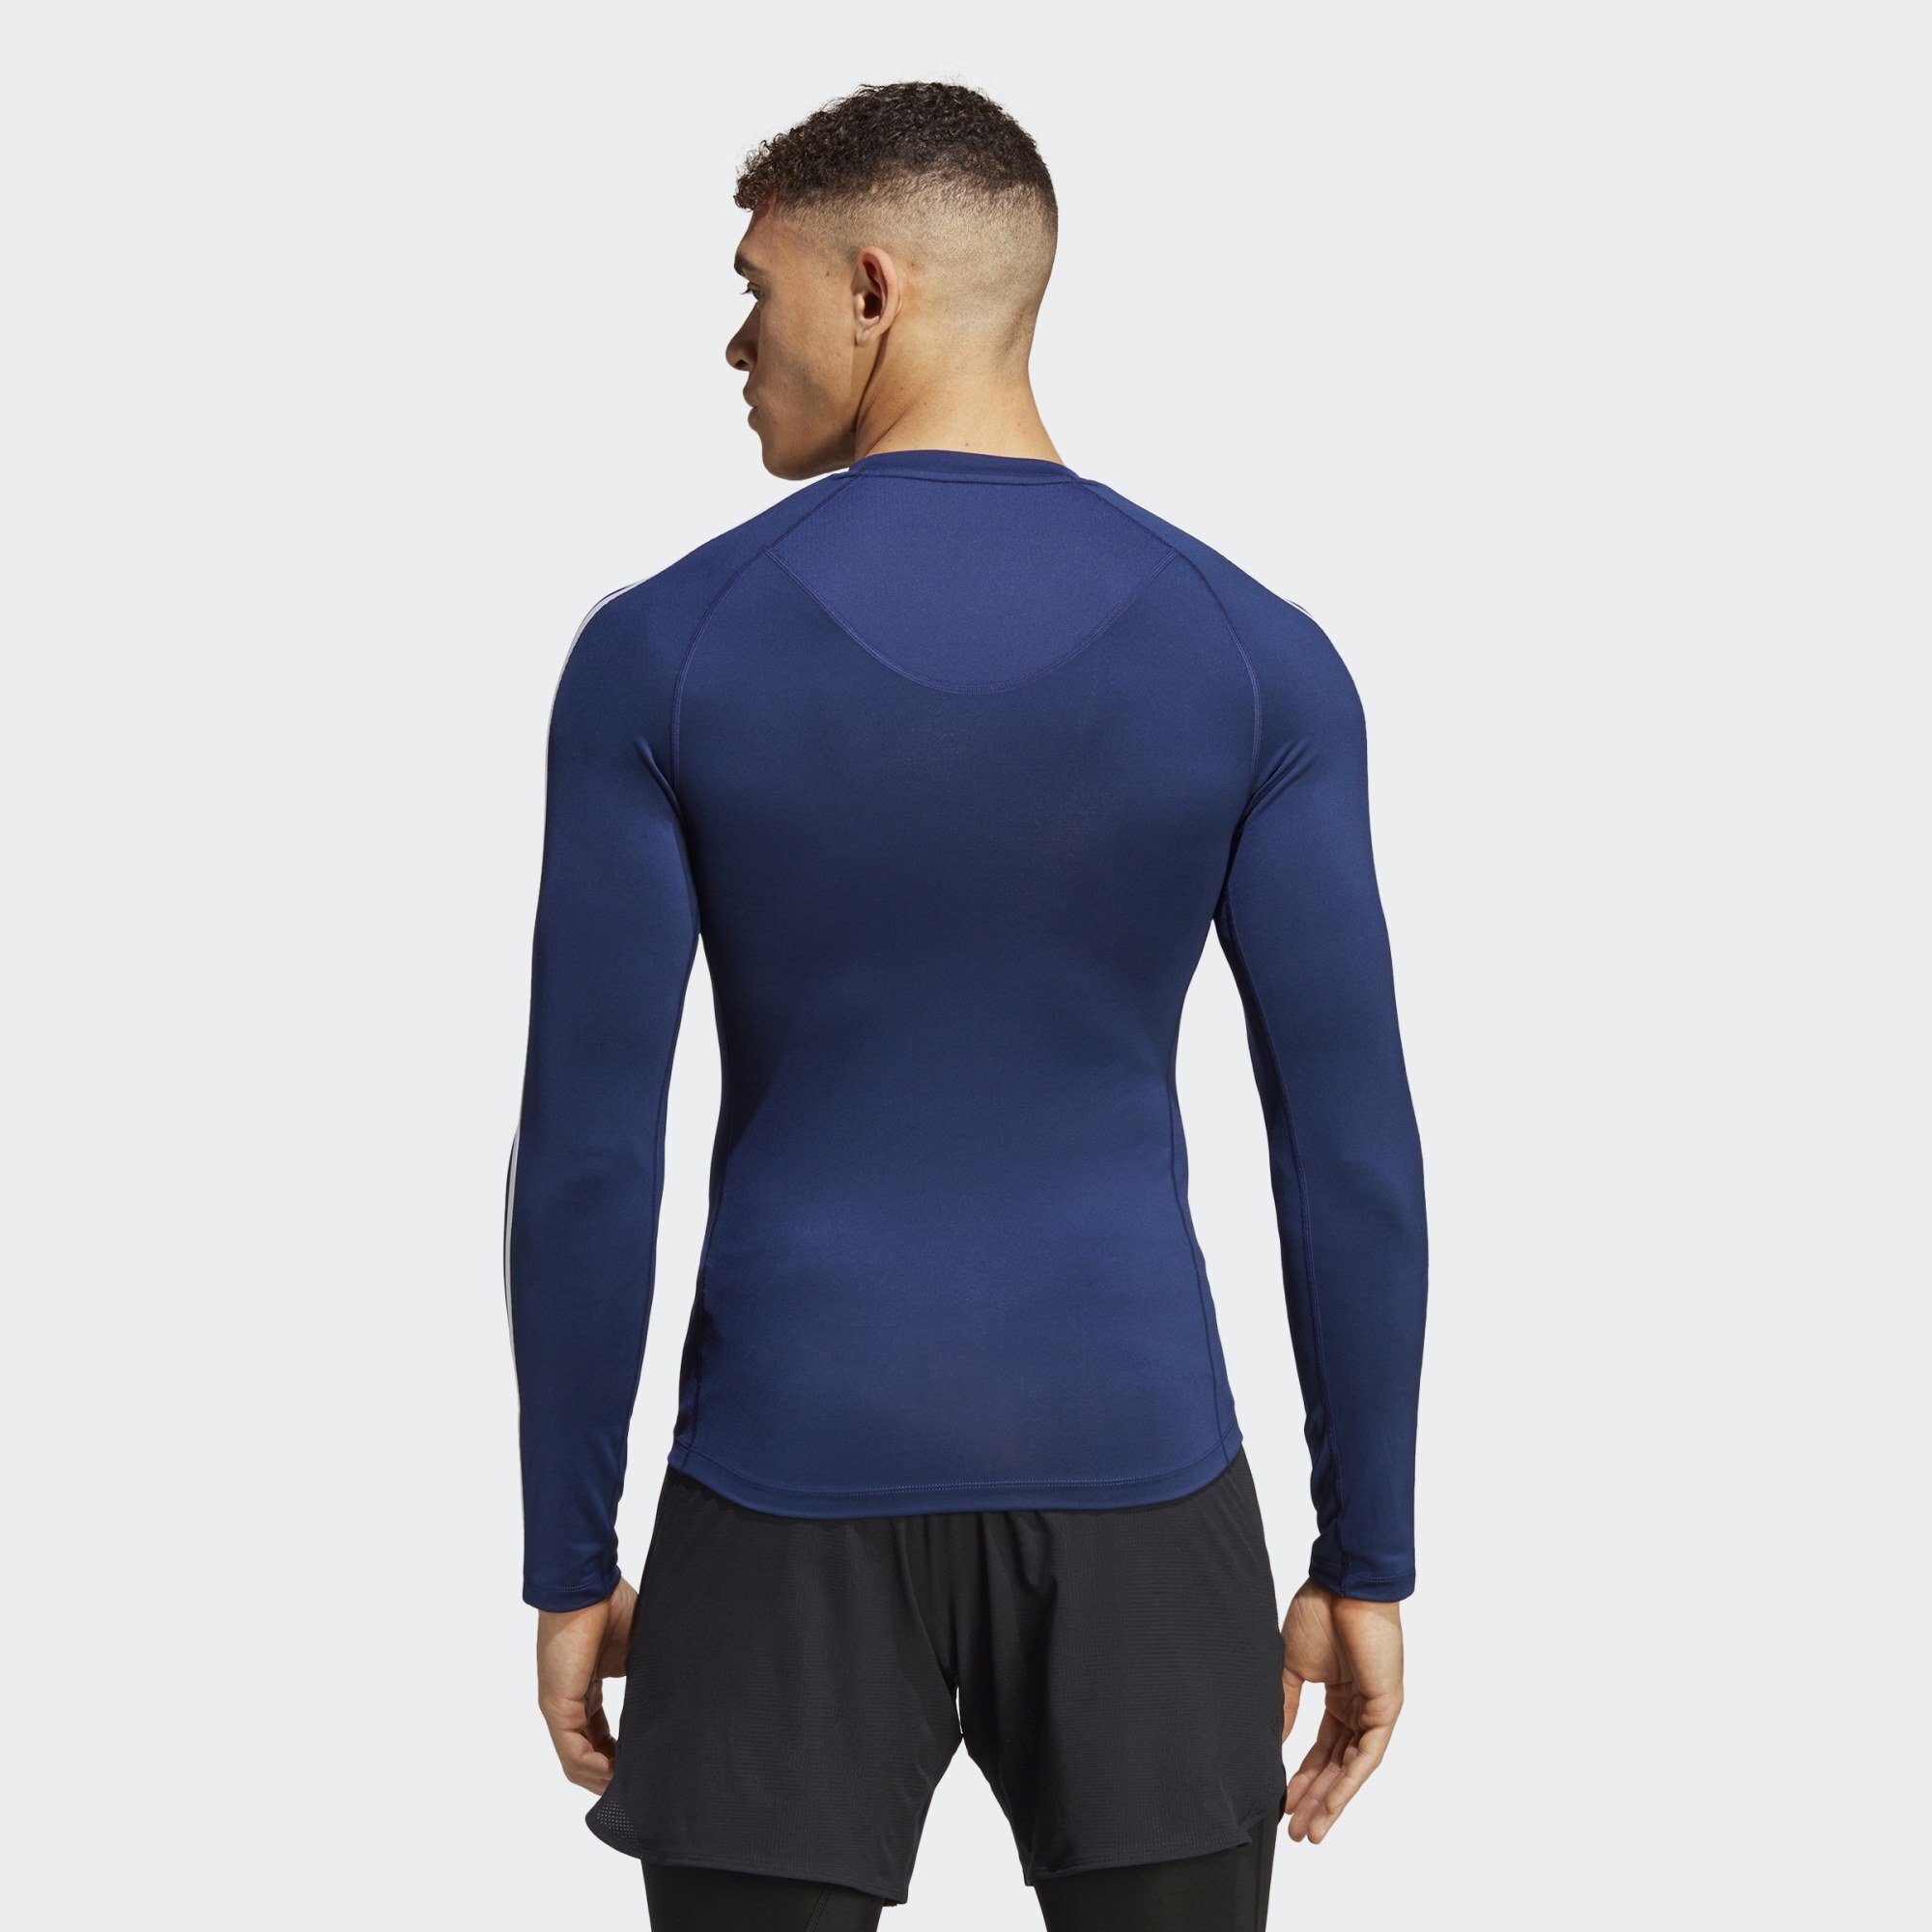 TECHFIT Dark adidas Performance TRAINING LONGSLEEVE Funktionsshirt Blue 3-STREIFEN